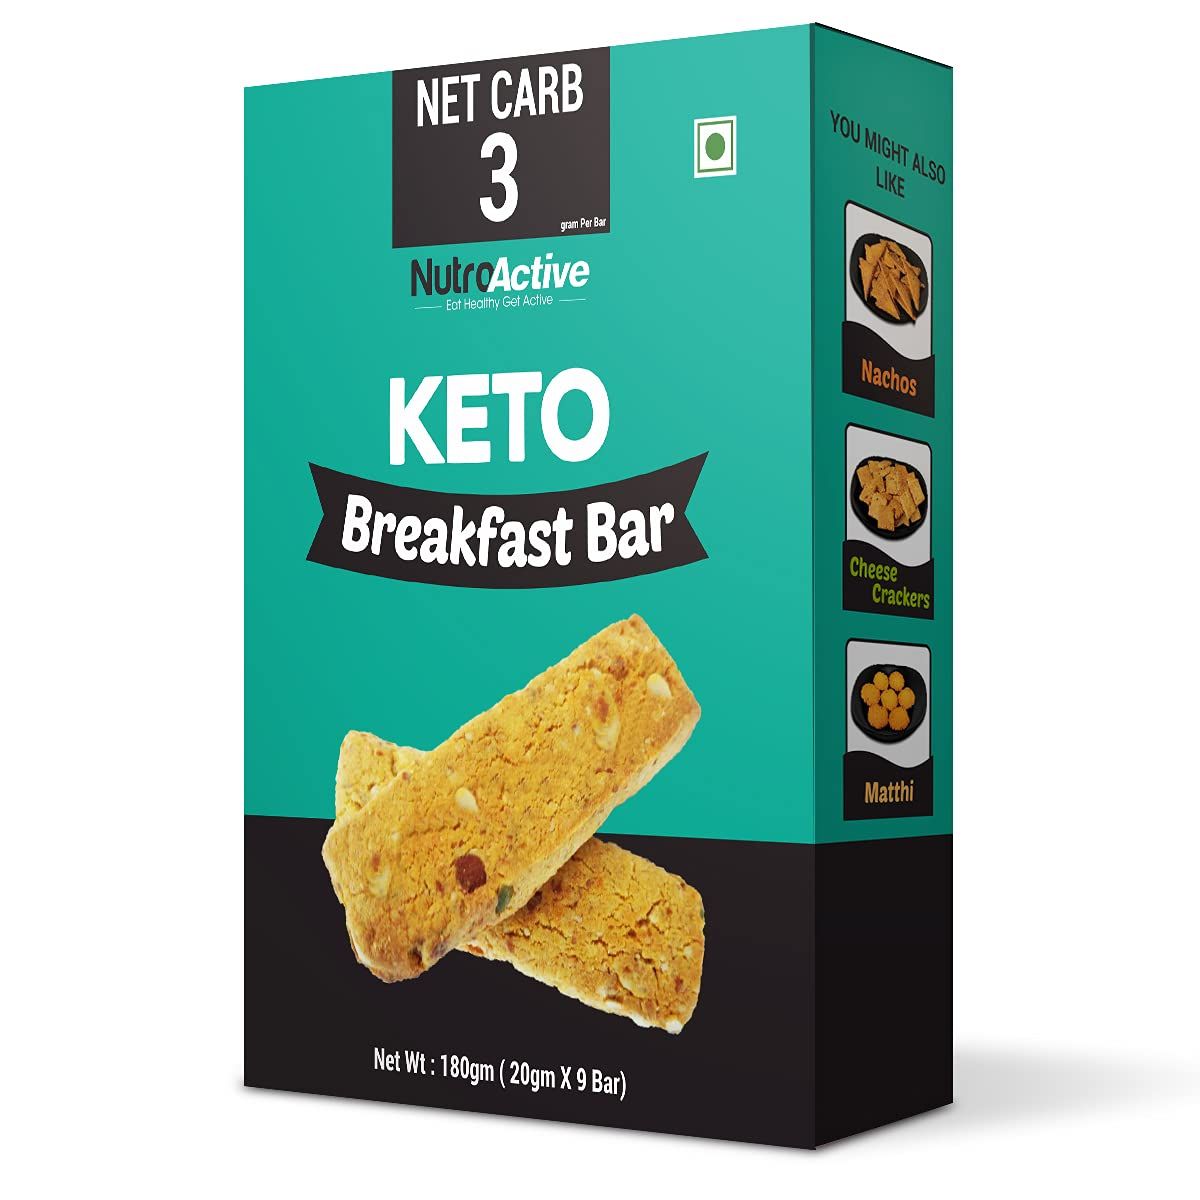 Nutroactive Keto Breakfast Bar Image